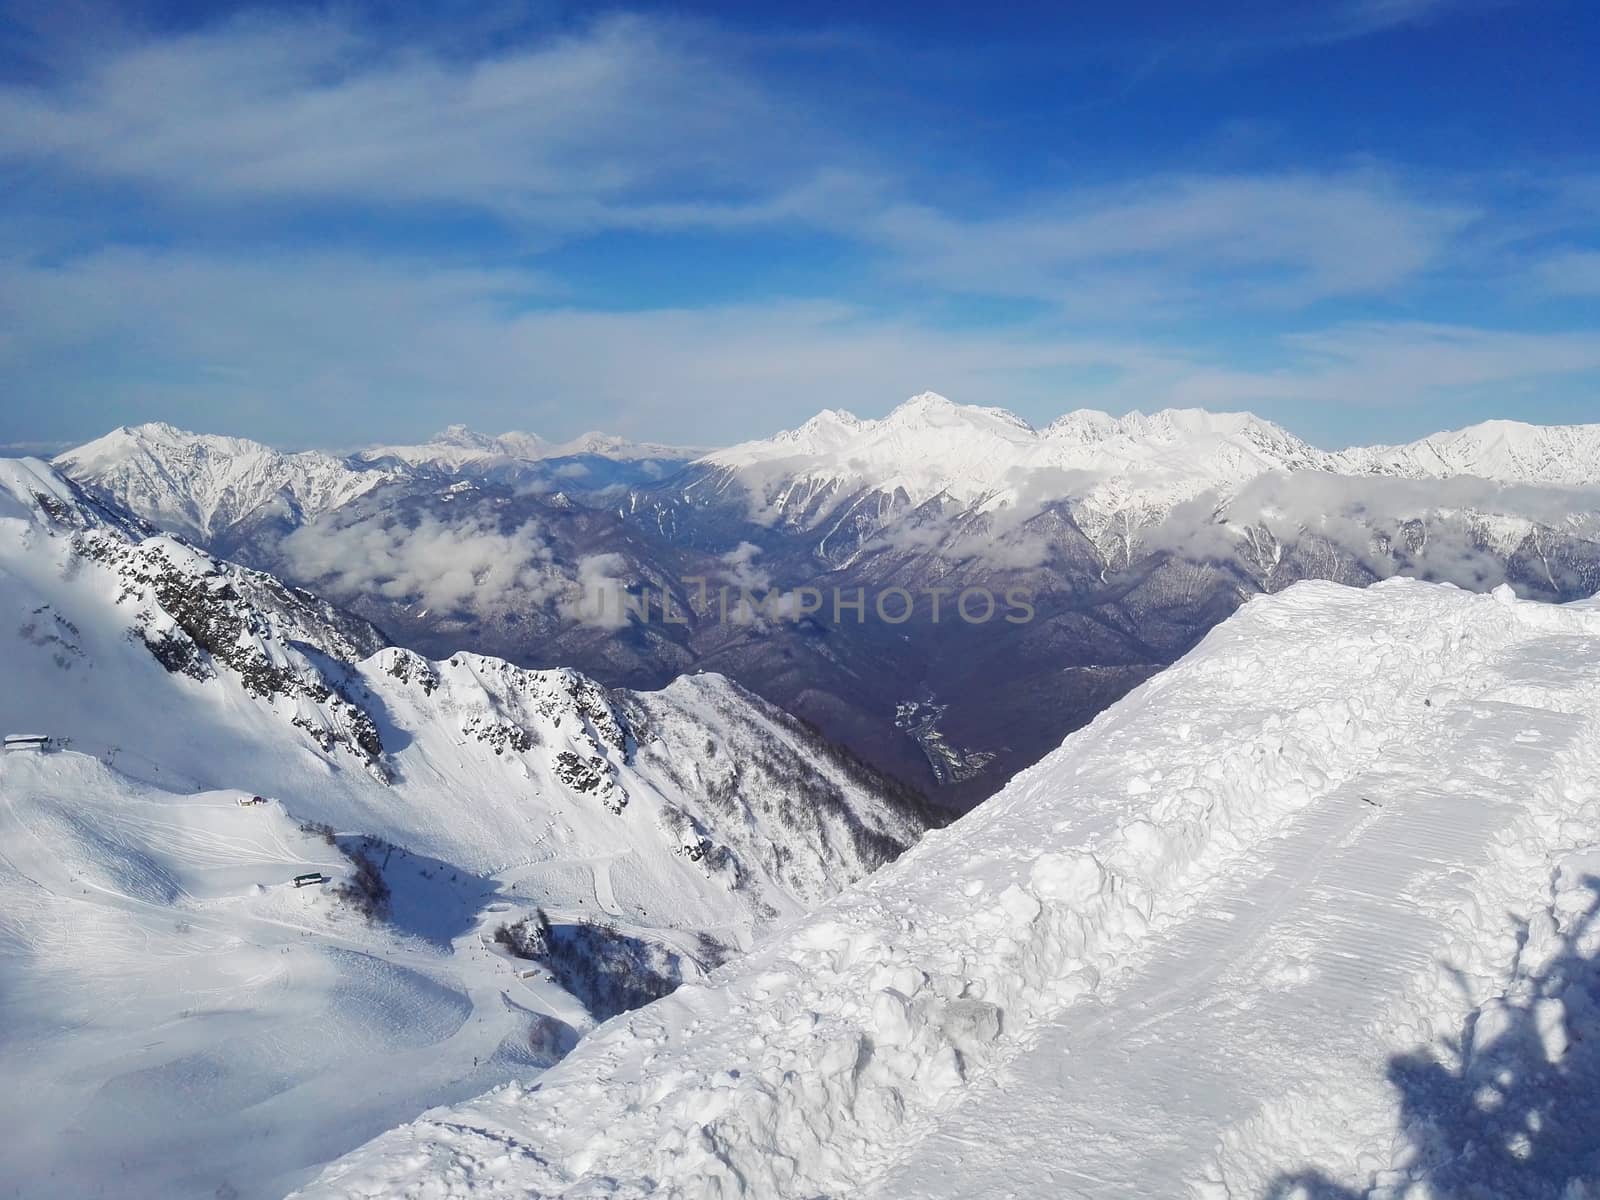 .Winter ski resort view of mountains and slopes by galinasharapova